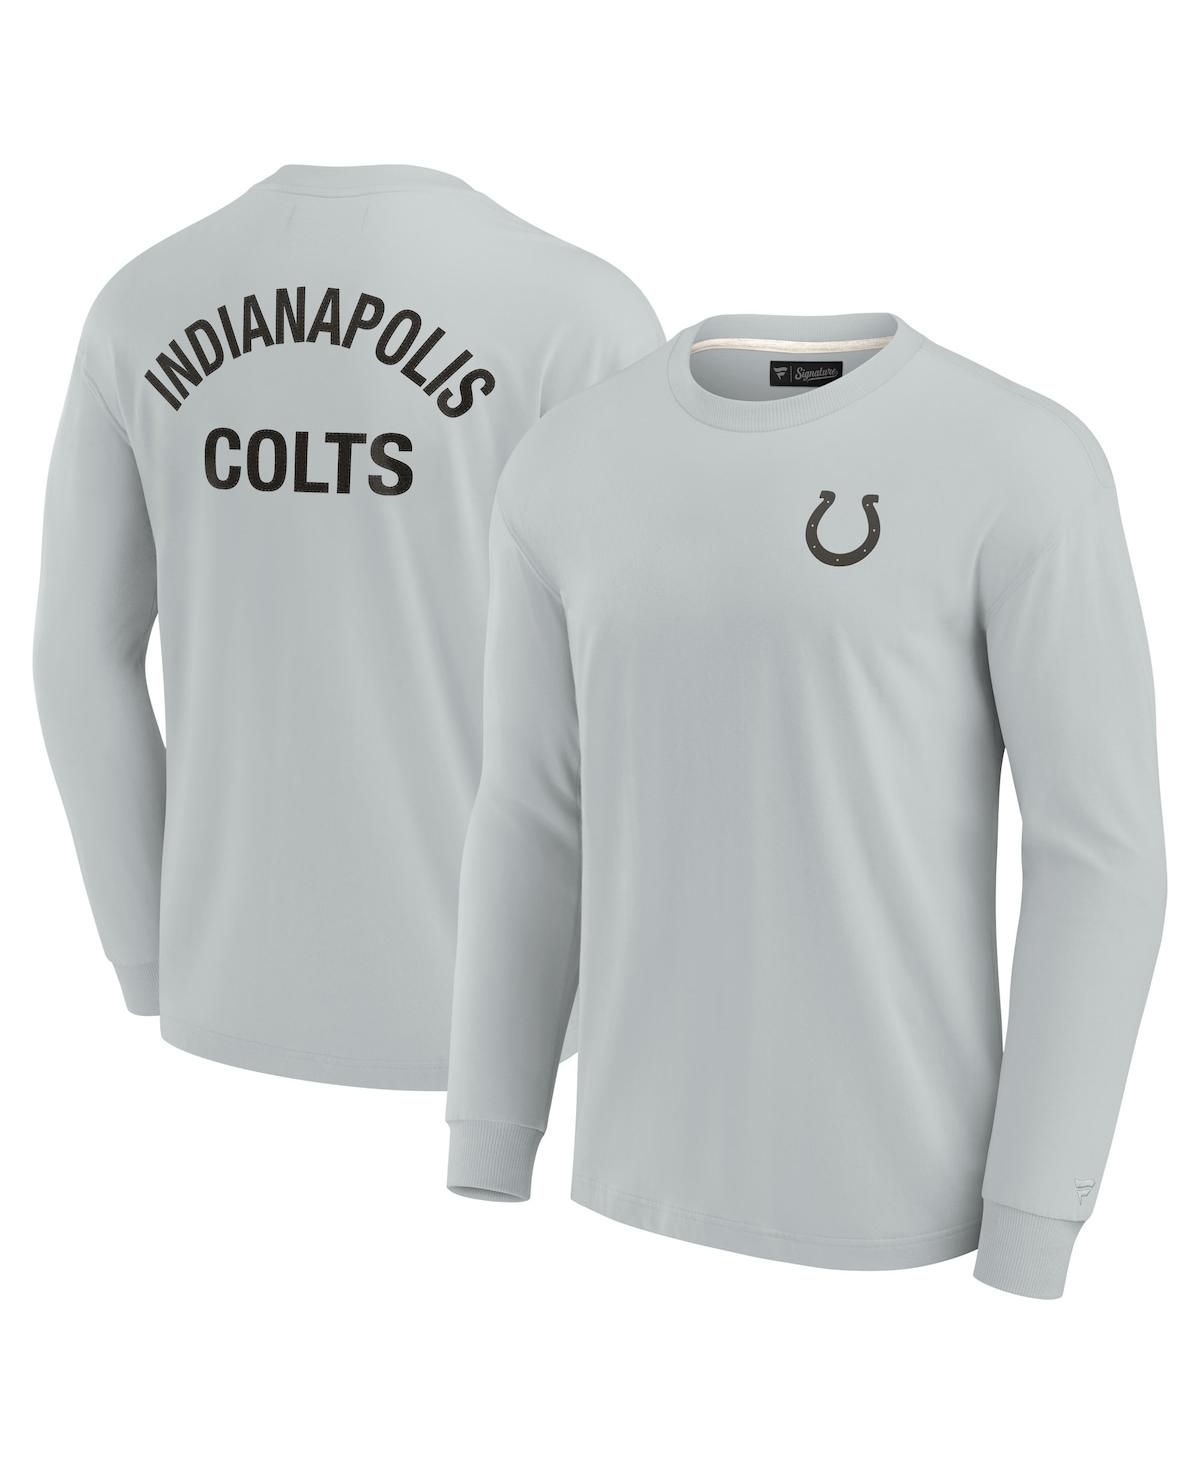 Fanatics Signature Men's And Women's  Gray Indianapolis Colts Super Soft Long Sleeve T-shirt